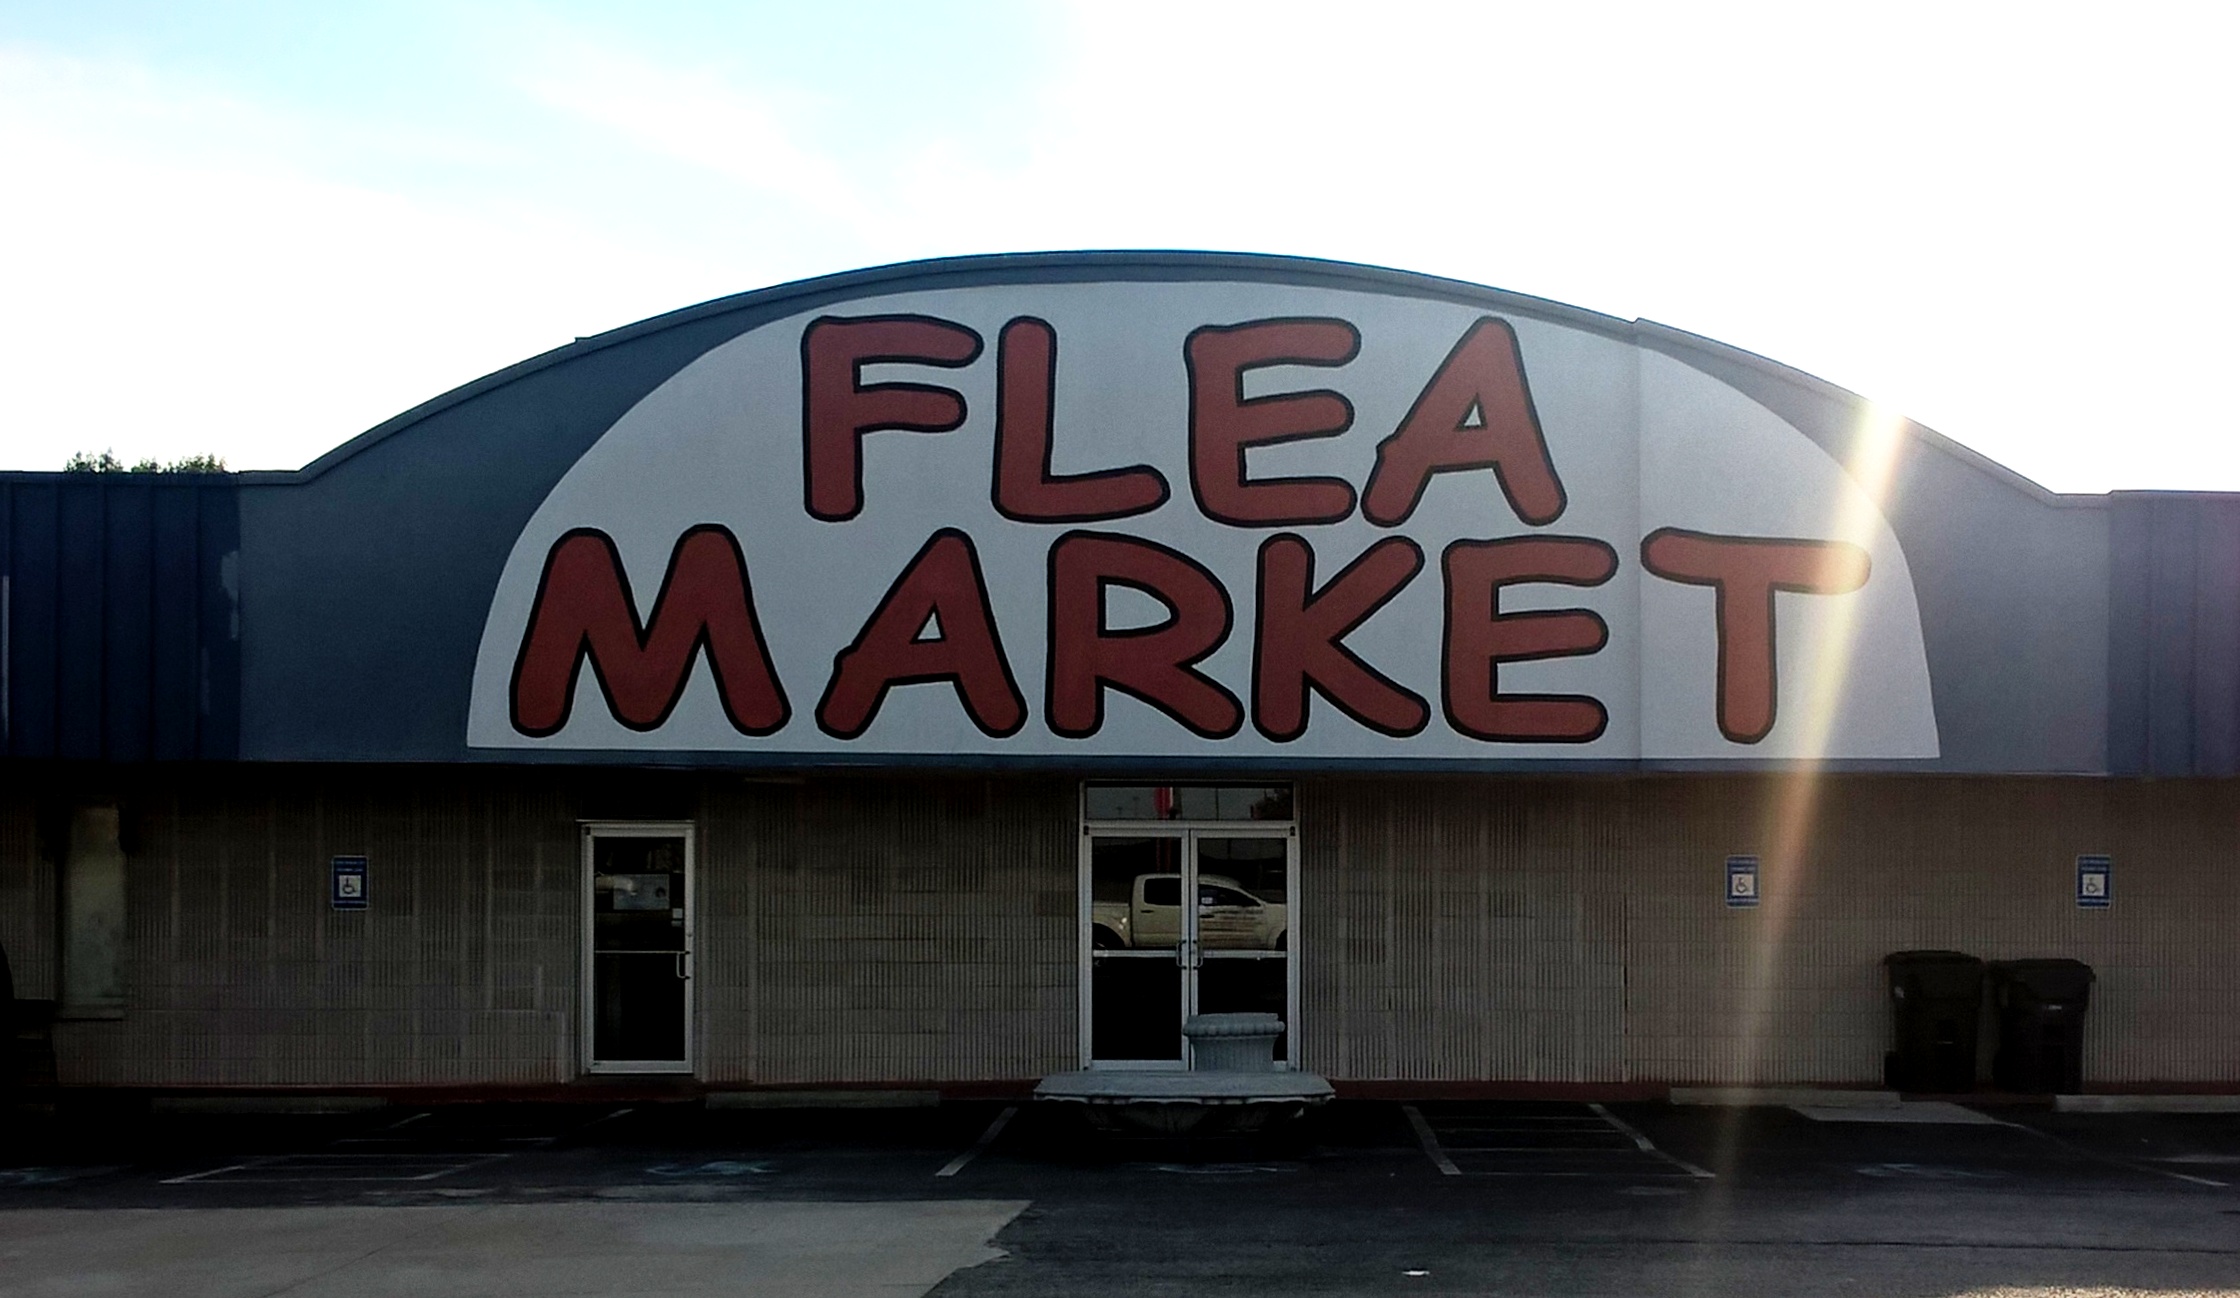 Americas Flea Market and Storage - Covington, GA 30016